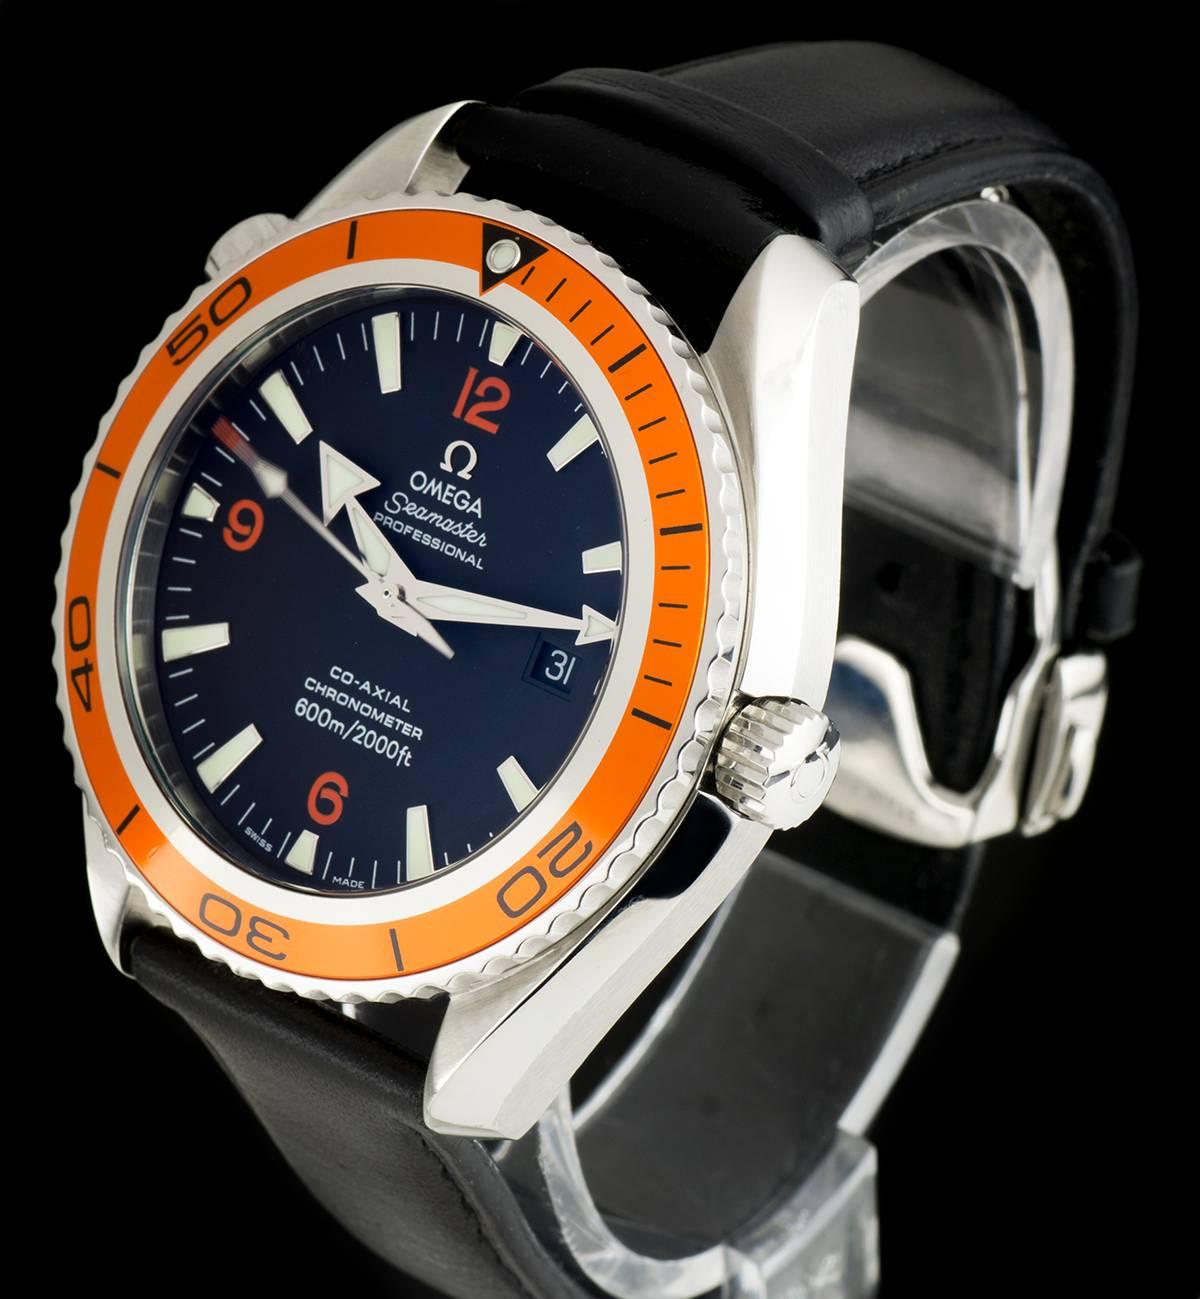 Planet Co-Axial Ocean Seamaster Steel Black Dial Orange Bezel Automatic Watch 1